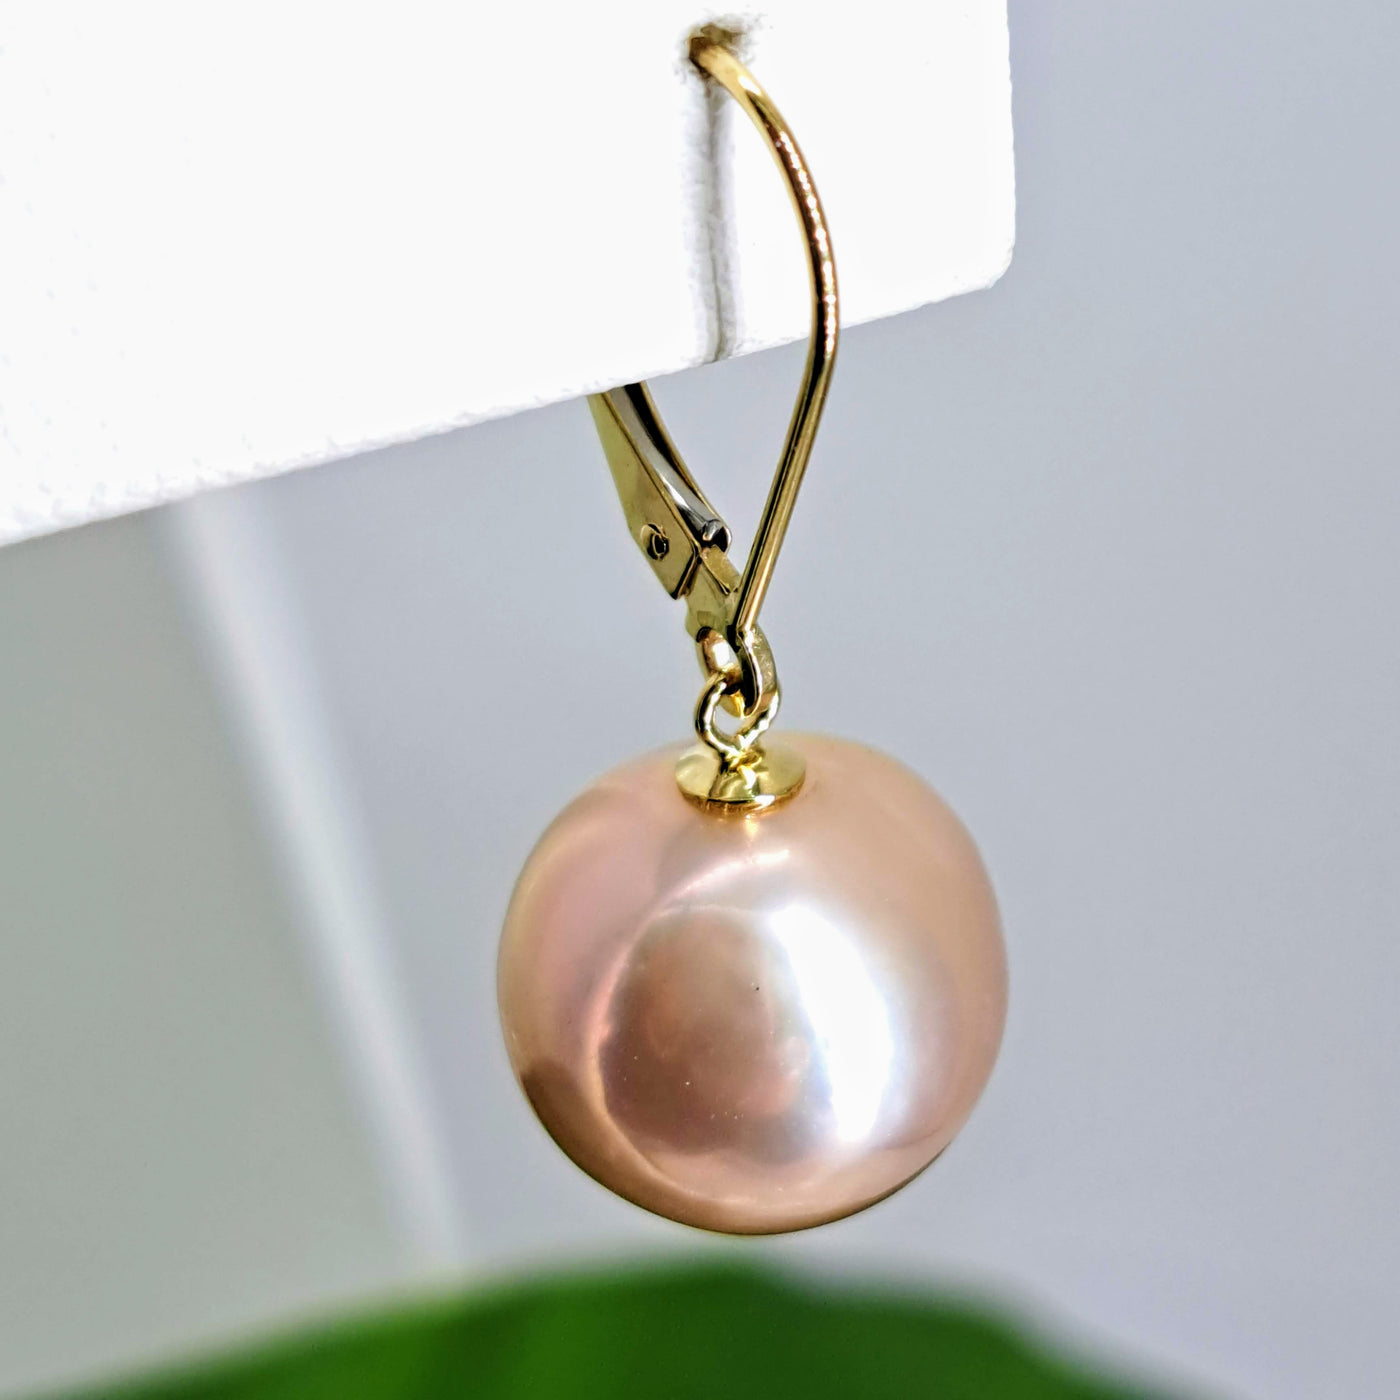 "Pink Lady" 1.25" Earrings - Edison Pearls, 14k Gold